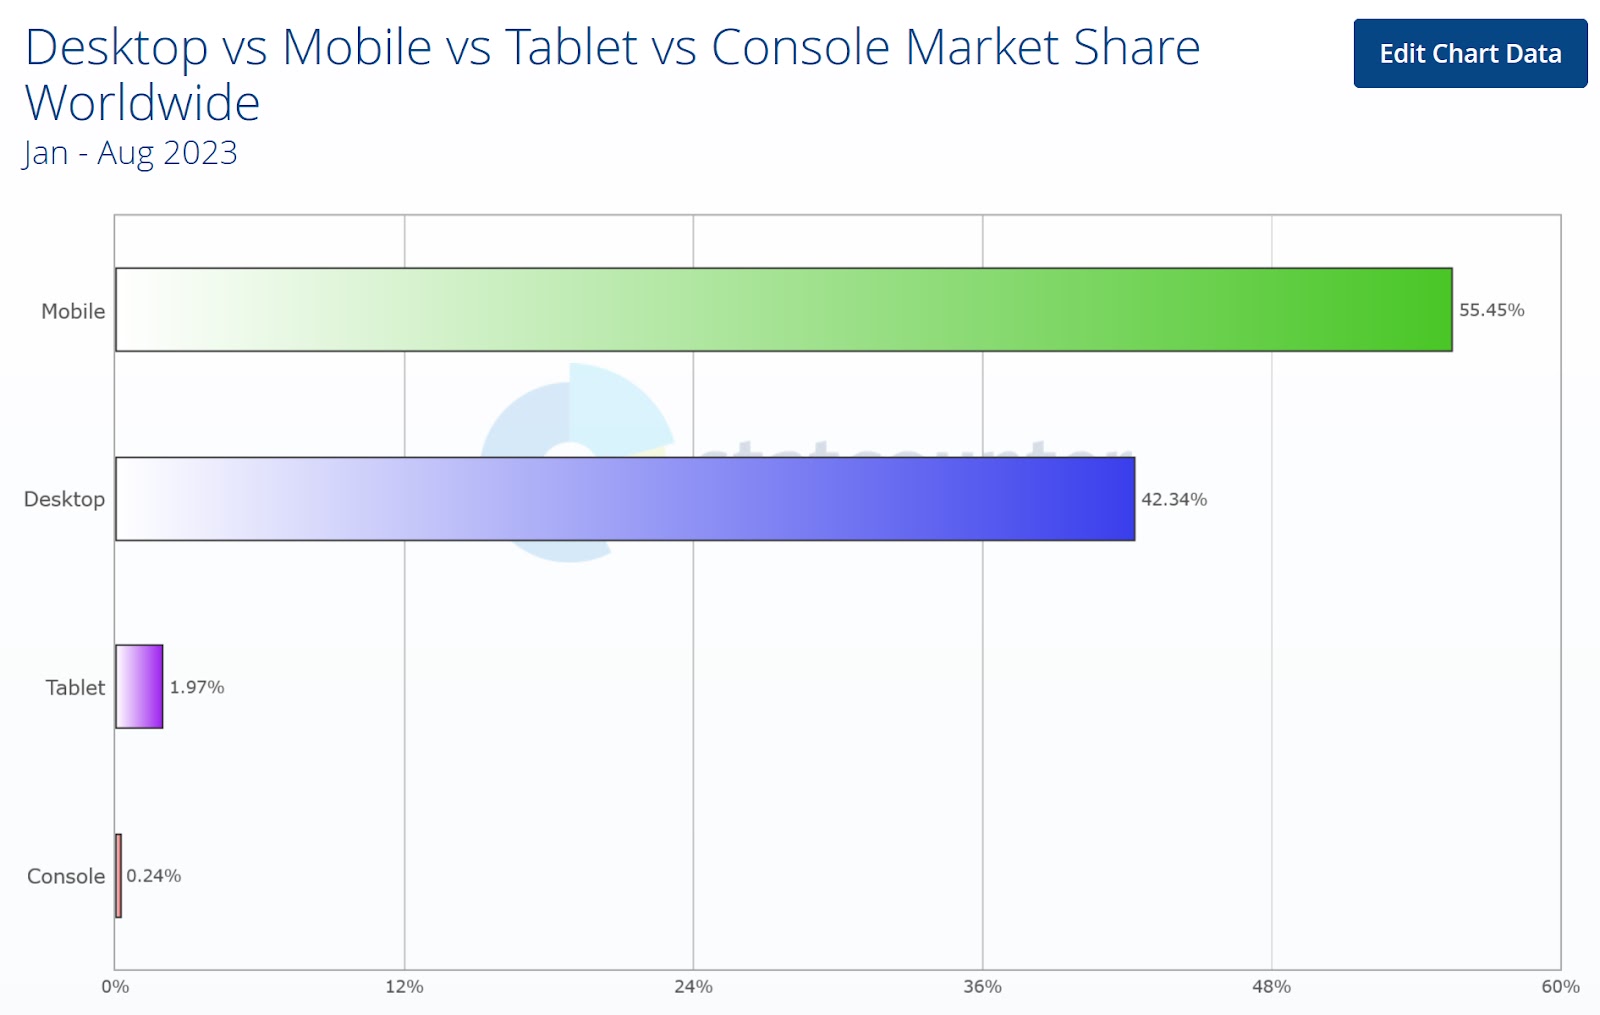 A graph showing desktop vs mobile vs tablet vs console market share worldwide